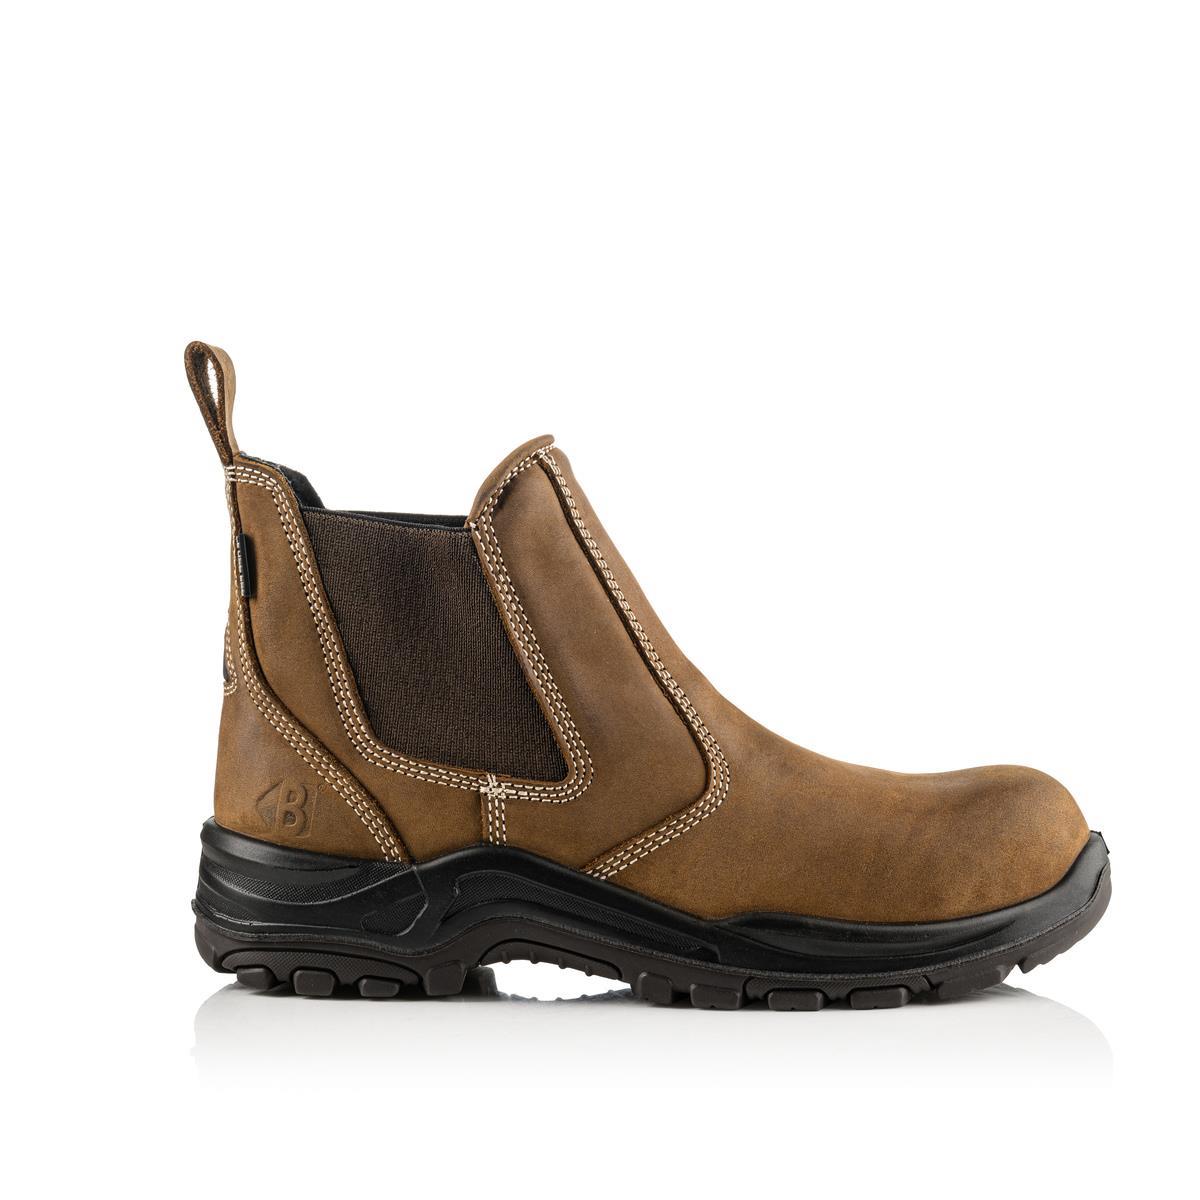 Buckbootz Dealerz S3 waterproof composite toe/midsole safety dealer work boot